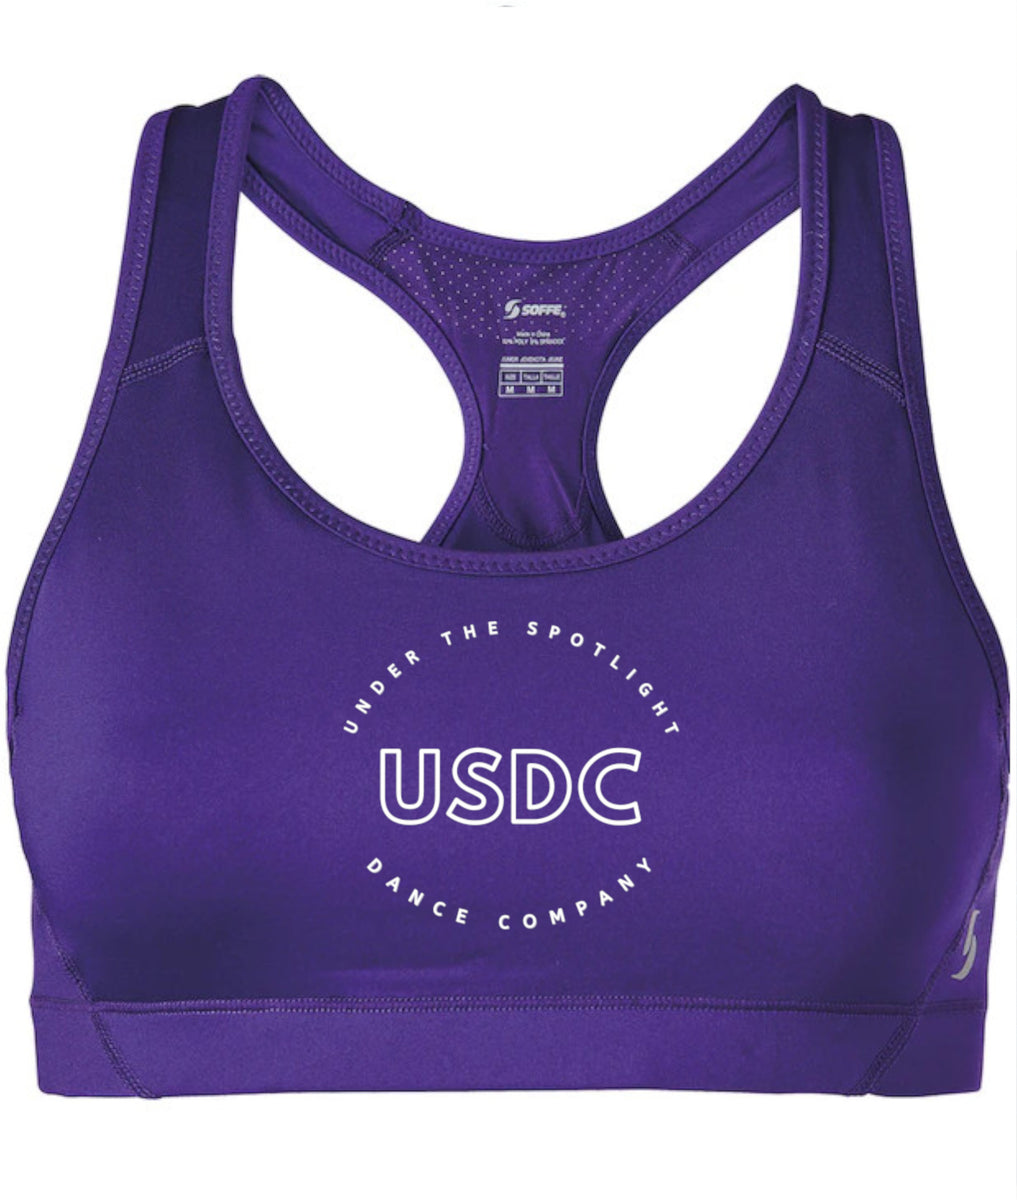 USDC Sports Bra – The Unlimited Stitch